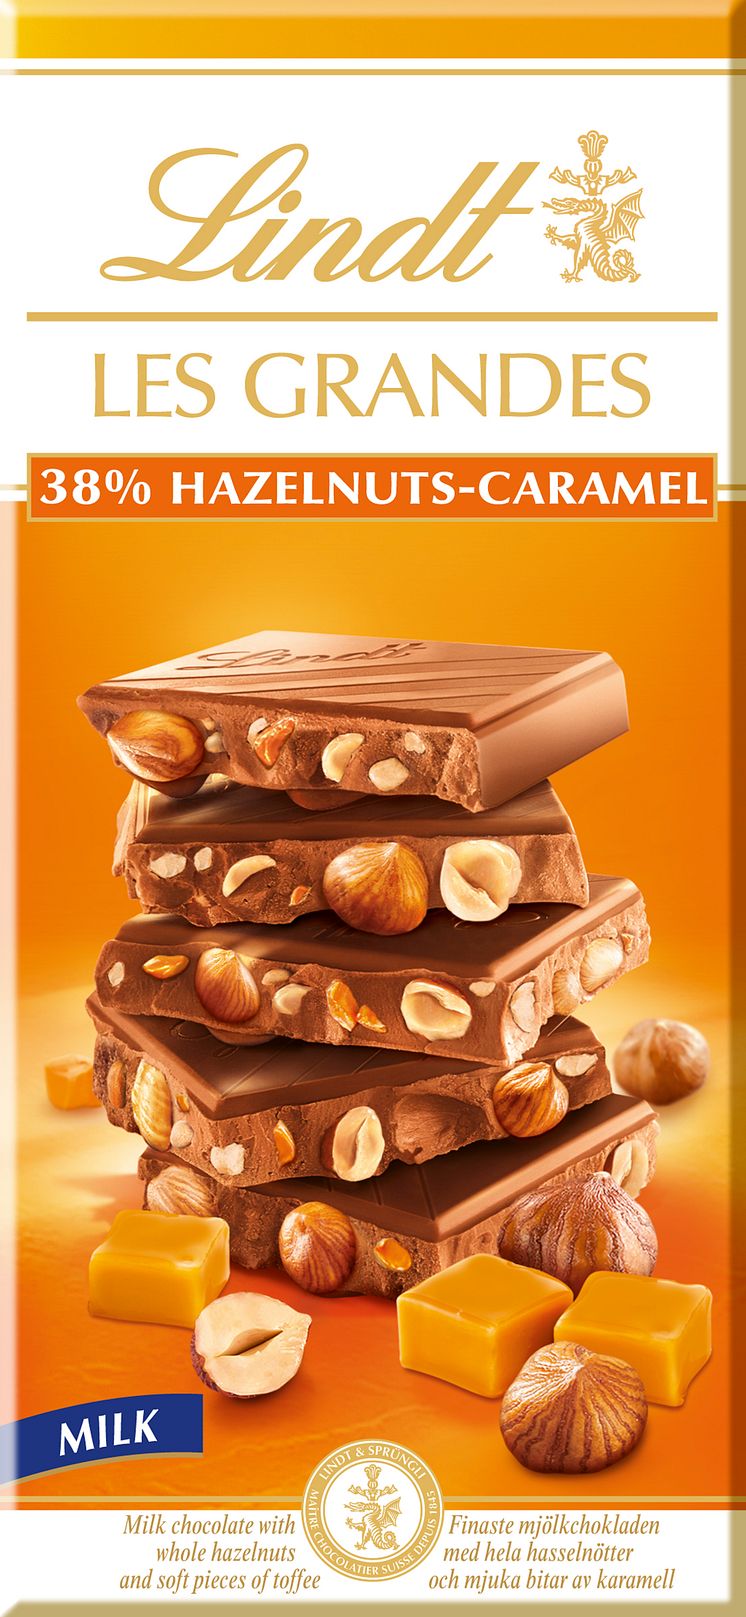 Lindt Les Grandes Milk Hazelnut-Caramel